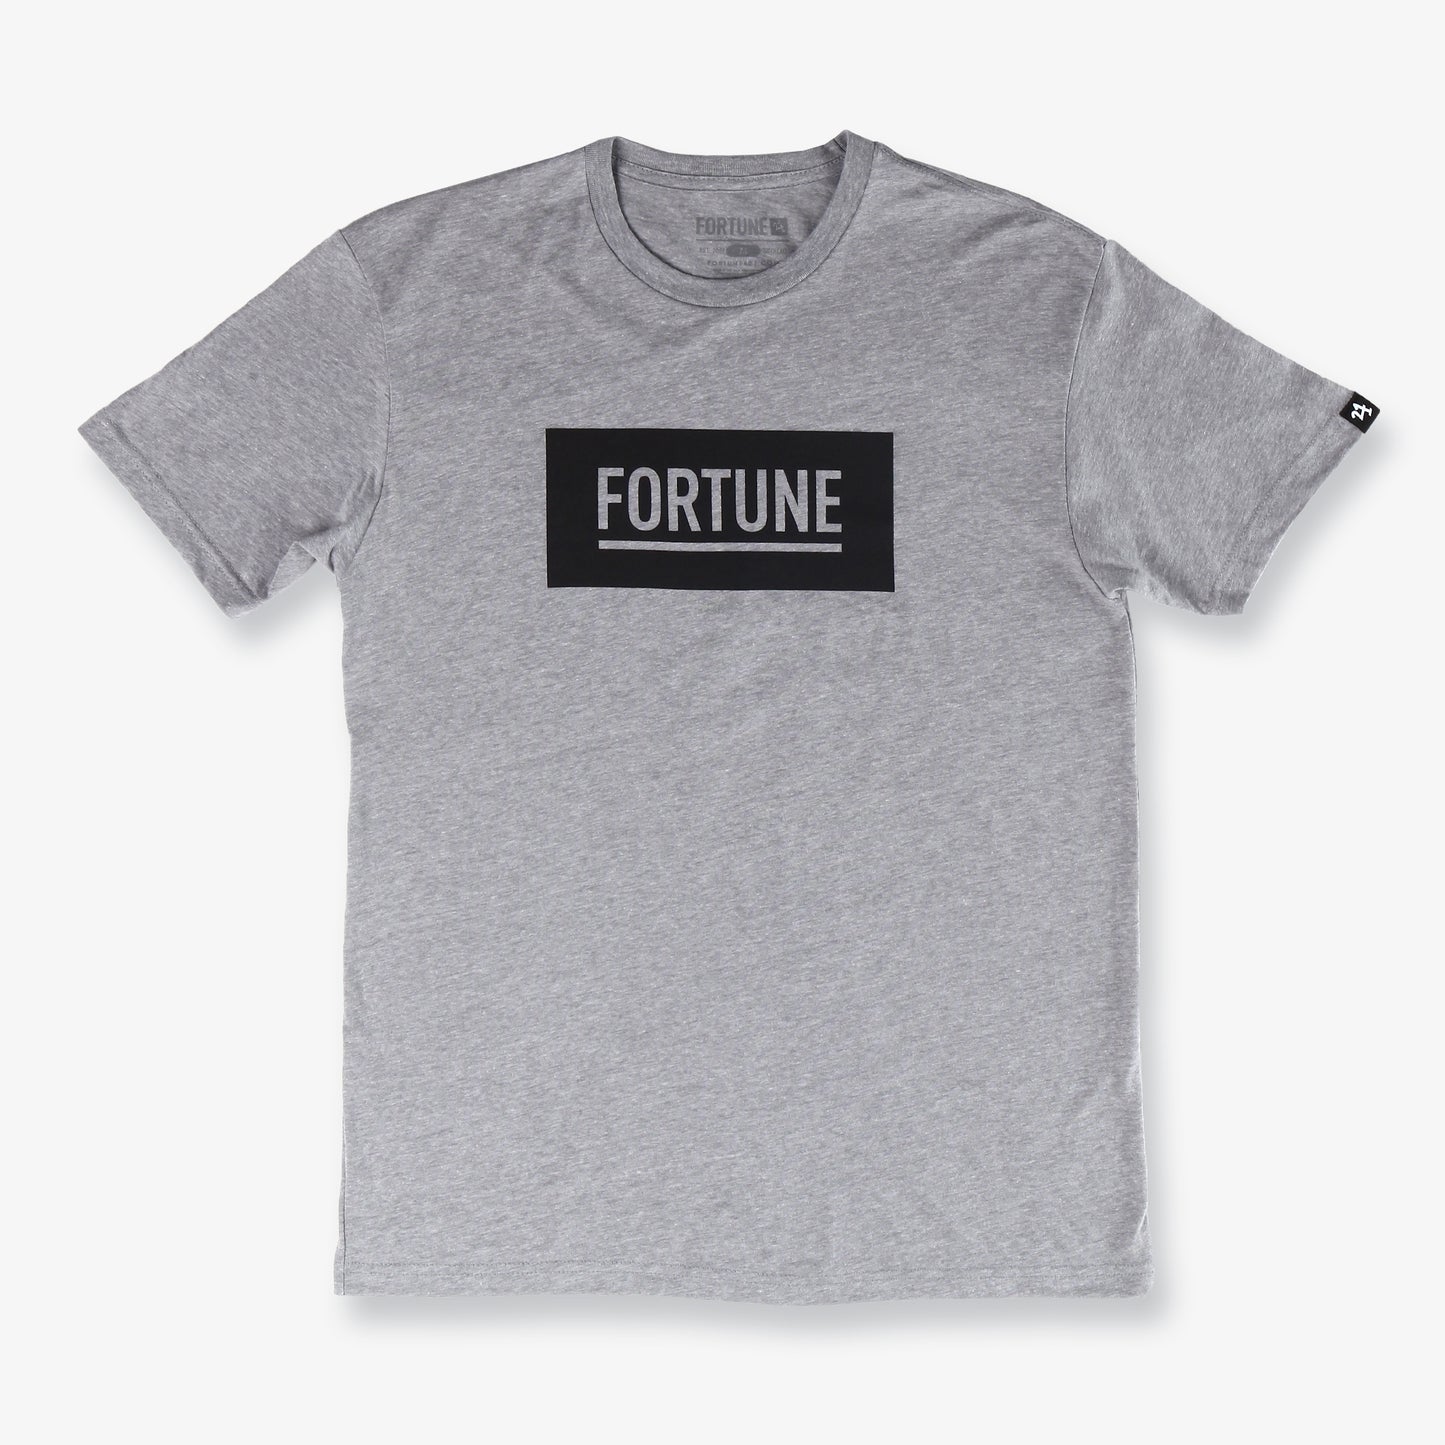 Fortune Crew Tee - Grey